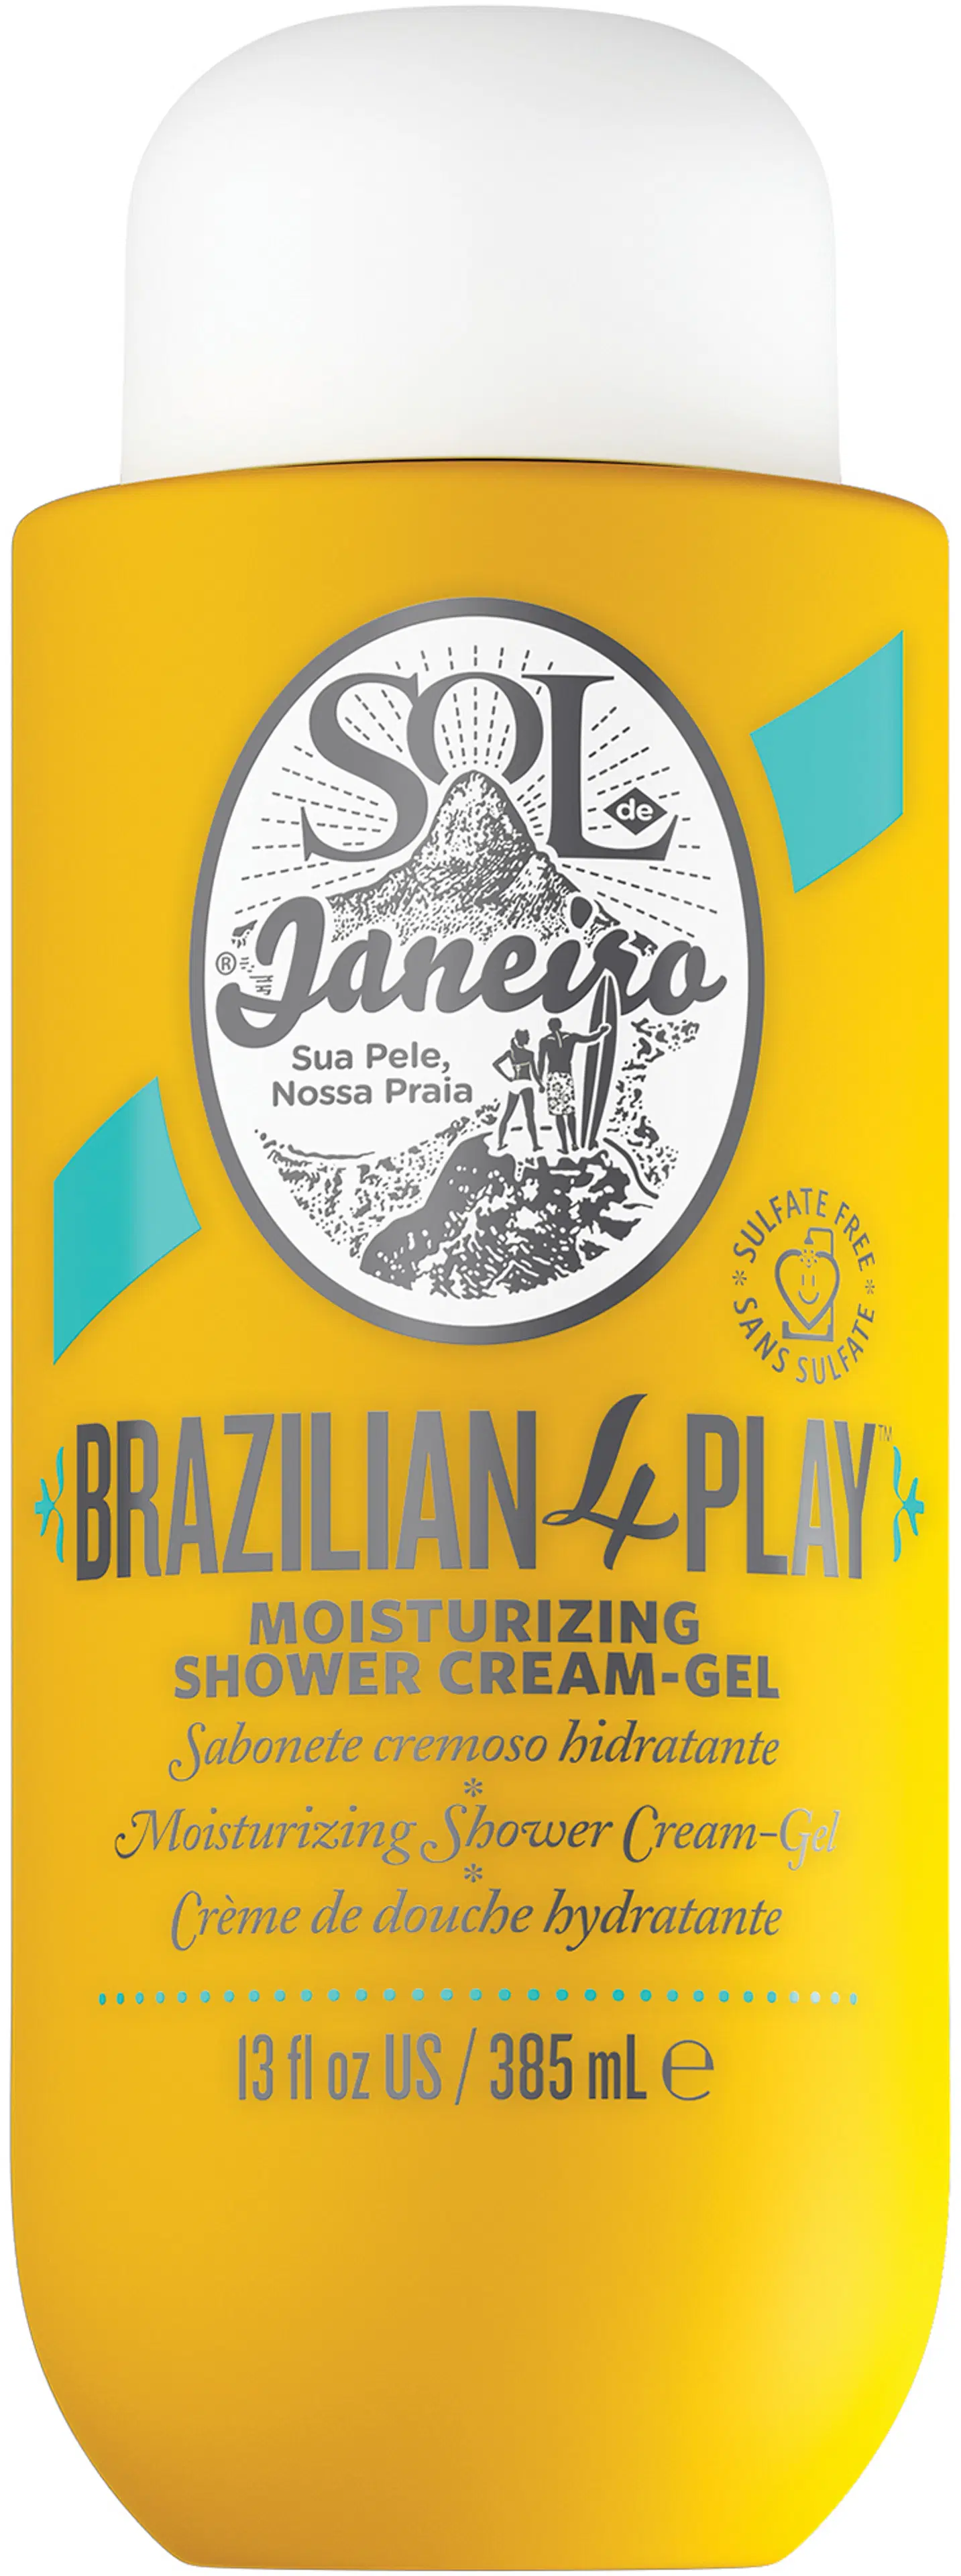 Sol de Janeiro Brazilian 4 Play Moisturizing Shower Cream-Gel suihkugeeli 385 ml